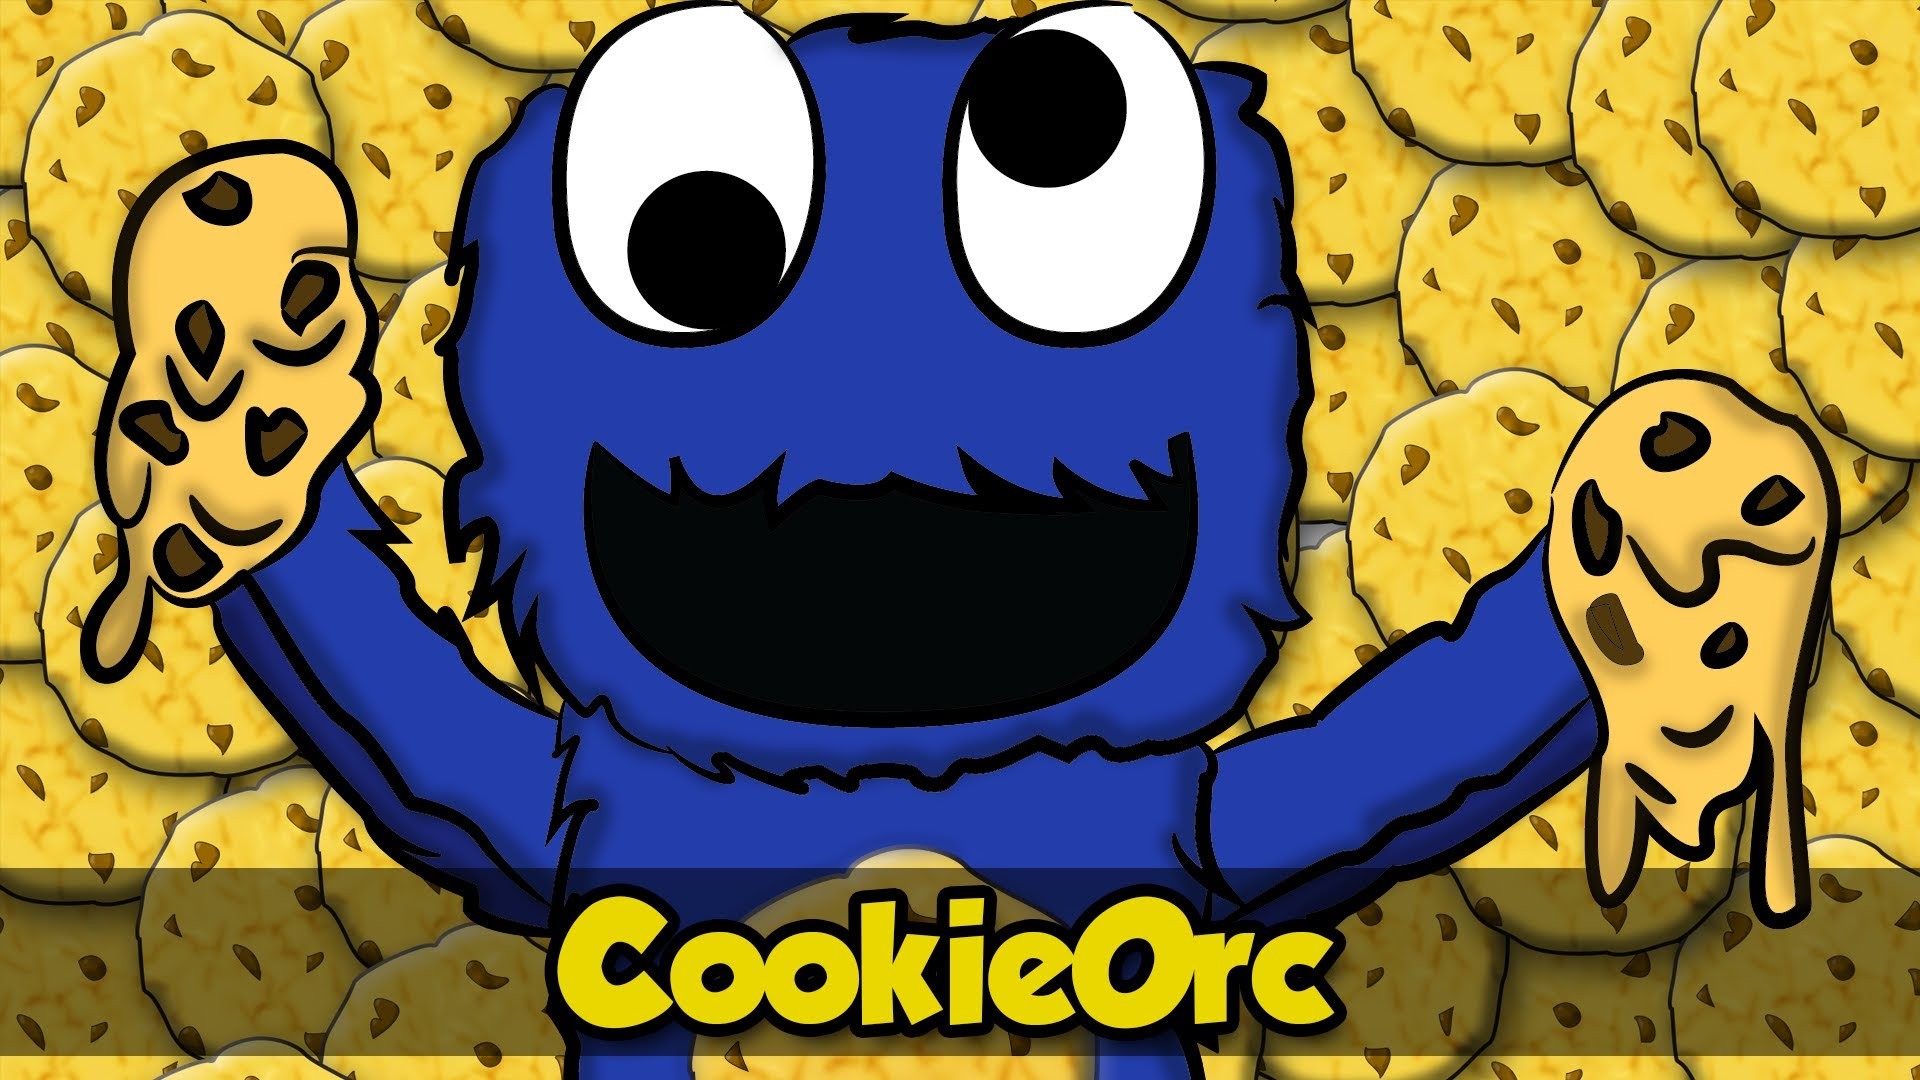 1920x1080 Minecraft Cookie Monster Wallpaper Hd 1080p Gold 900x506 Â- Minec...